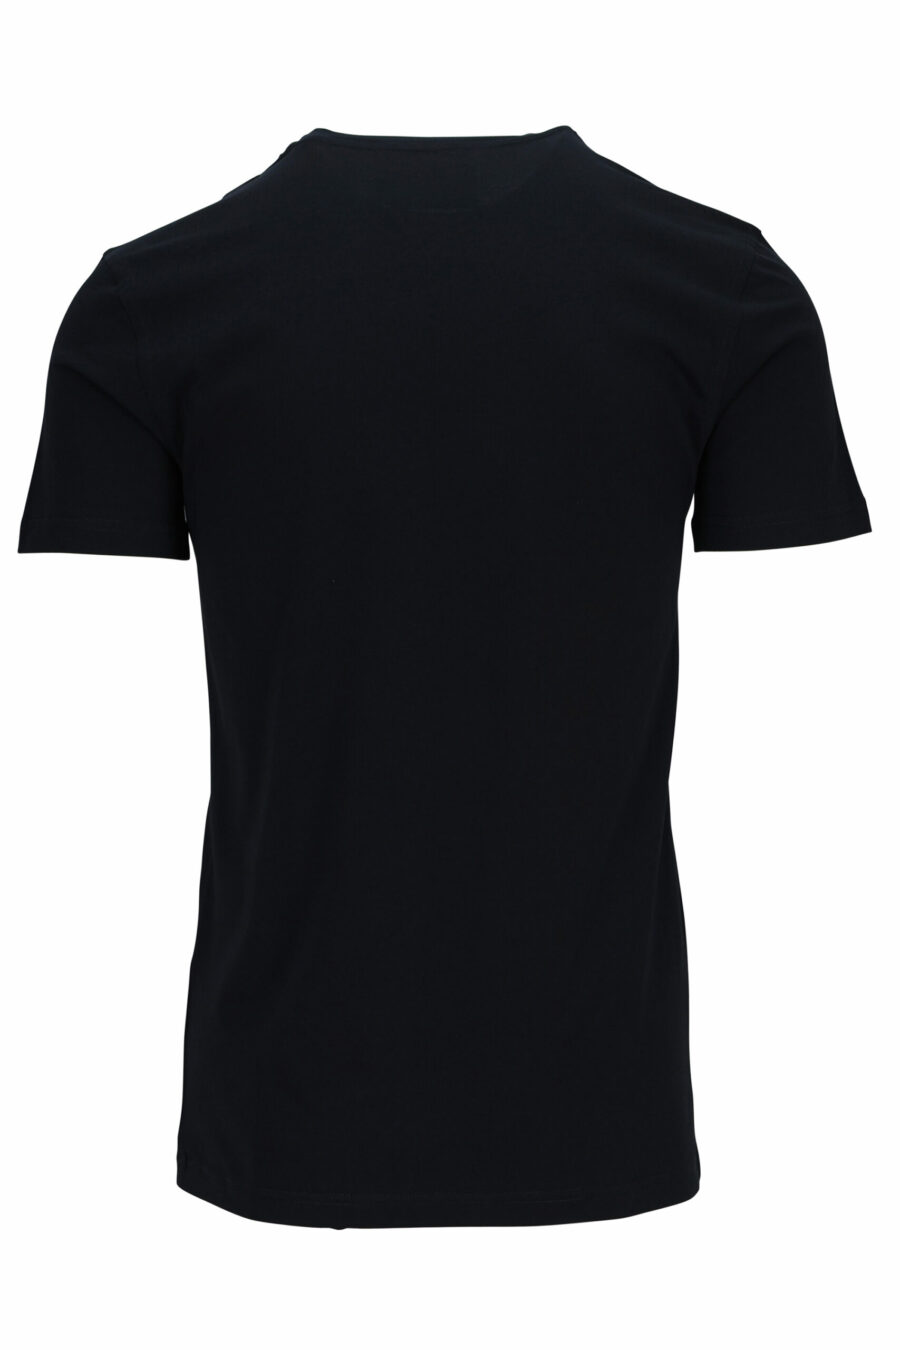 Camiseta negra con maxilogo "teddy" sastre - 667113108032 1 1 scaled